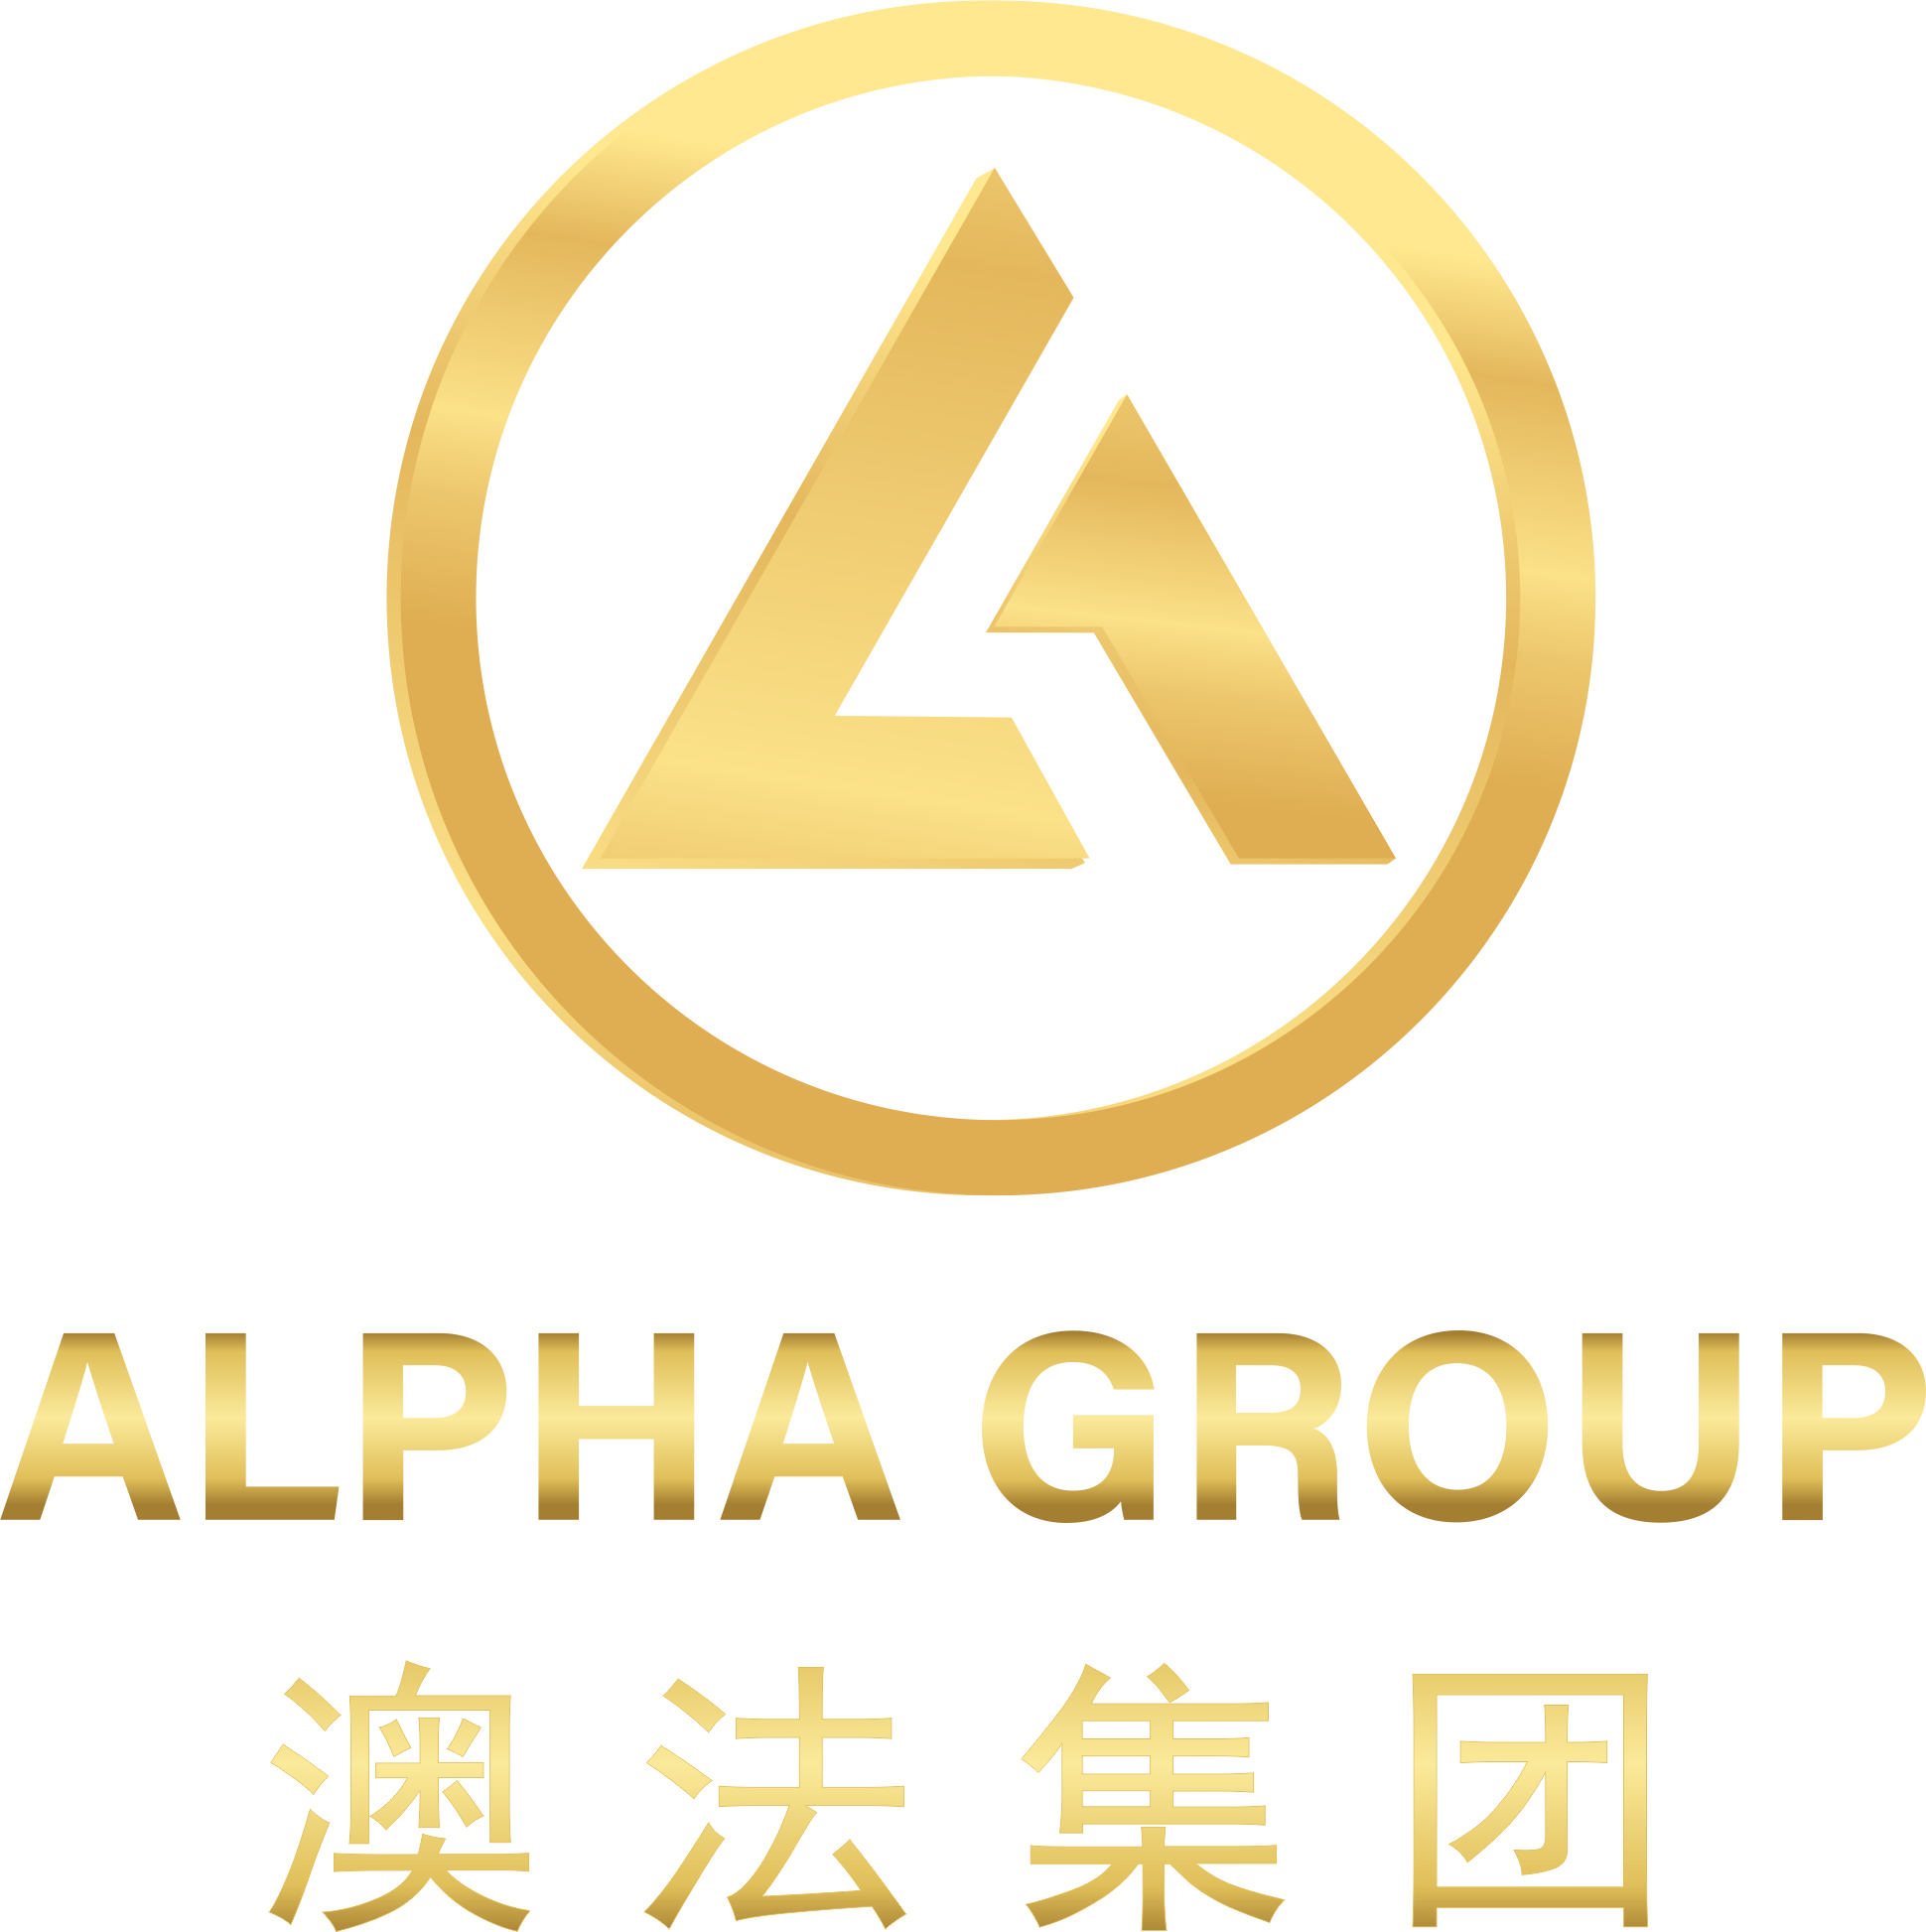 Alphs Group, 澳法集团